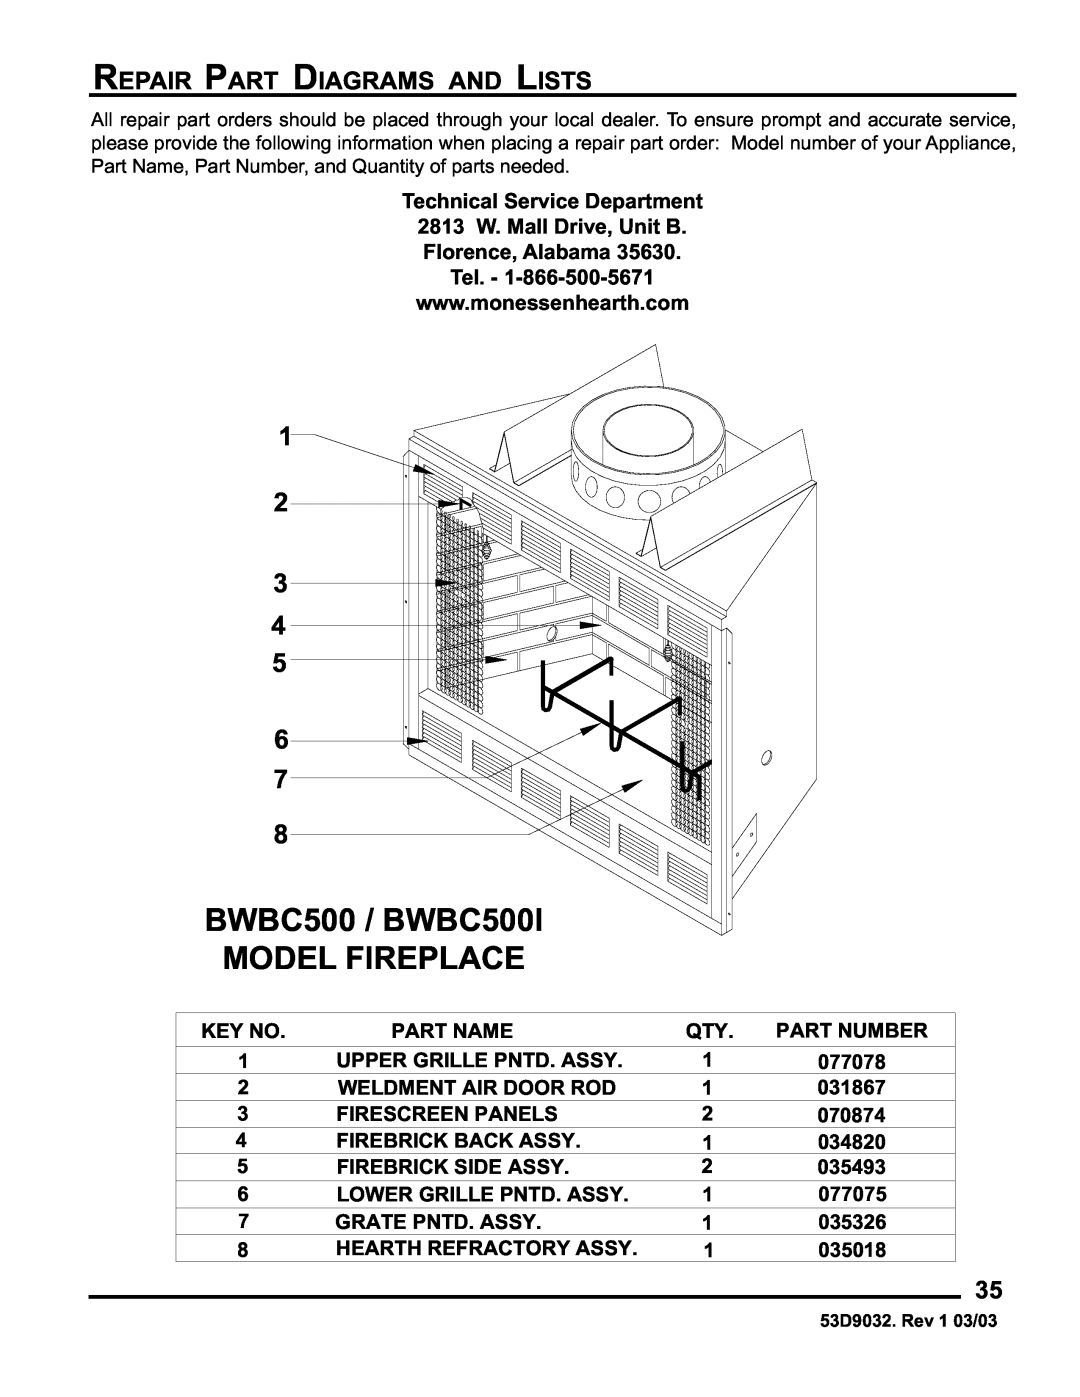 Monessen Hearth BWB400I, BWBC400I manual BWBC500 / BWBC500I MODEL FIREPLACE, Repair Part Diagrams And Lists 